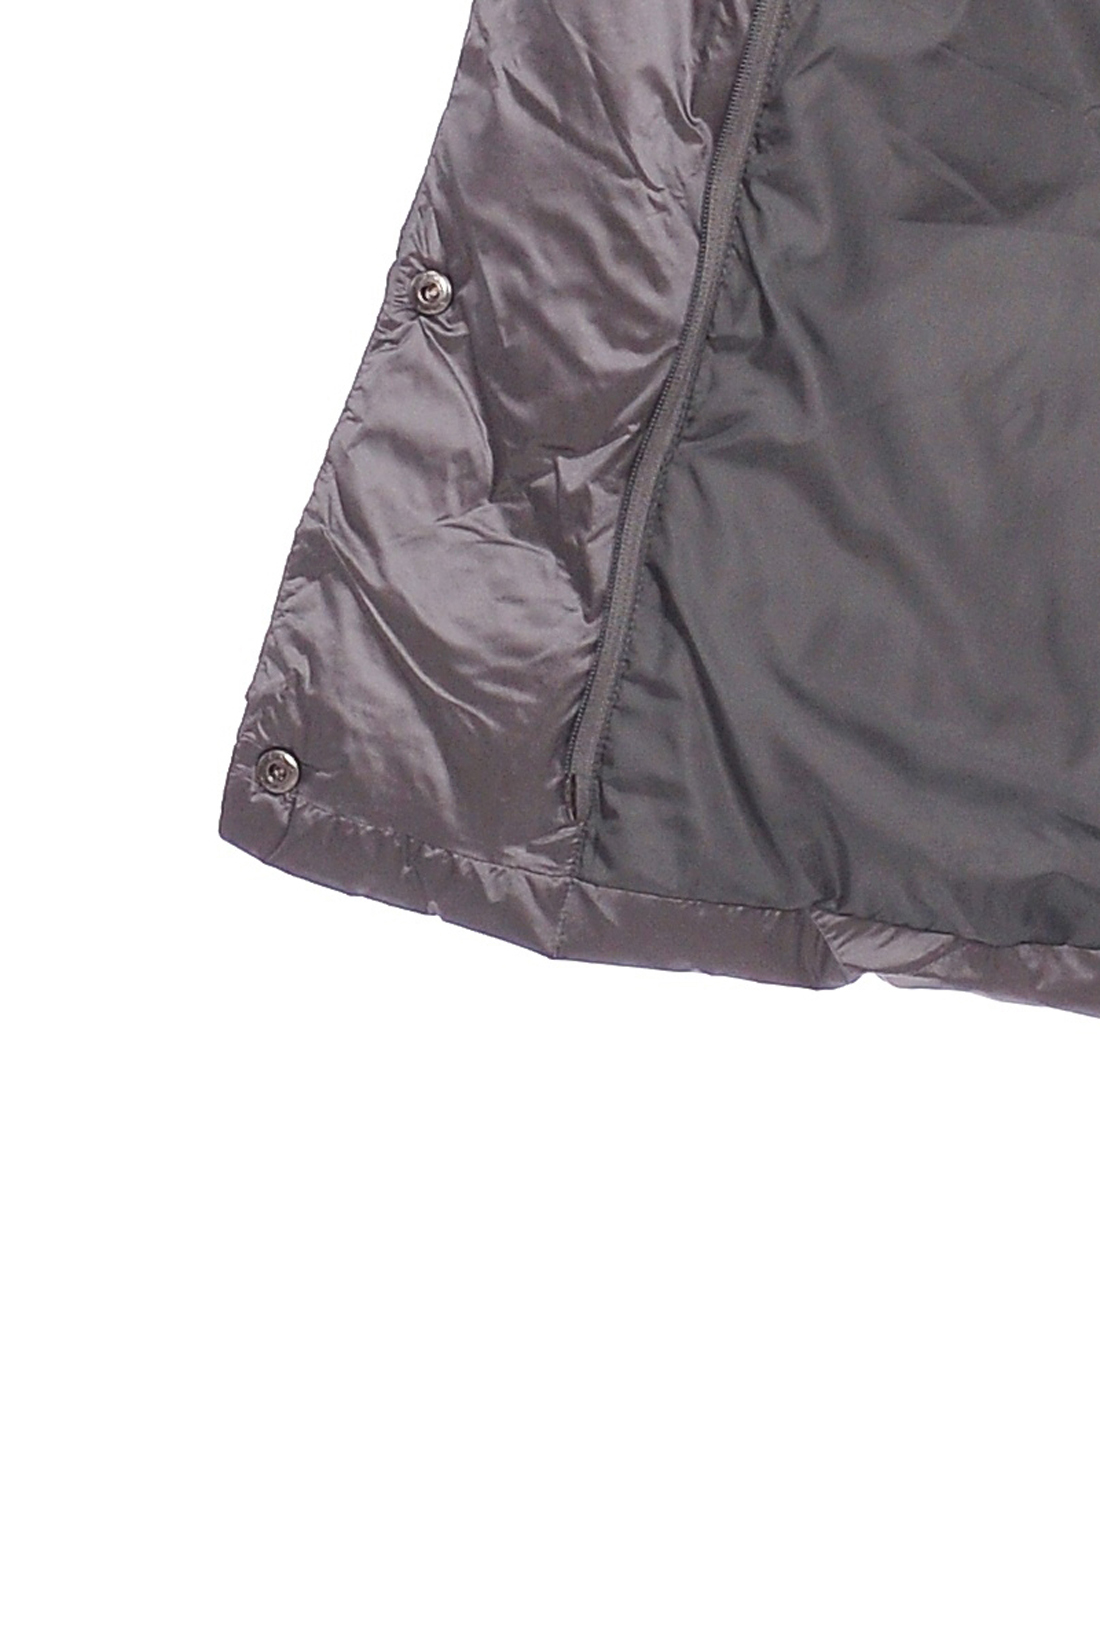 Пуховик с асимметричной стёжкой (арт. baon B008587), размер XL, цвет серый Пуховик с асимметричной стёжкой (арт. baon B008587) - фото 4